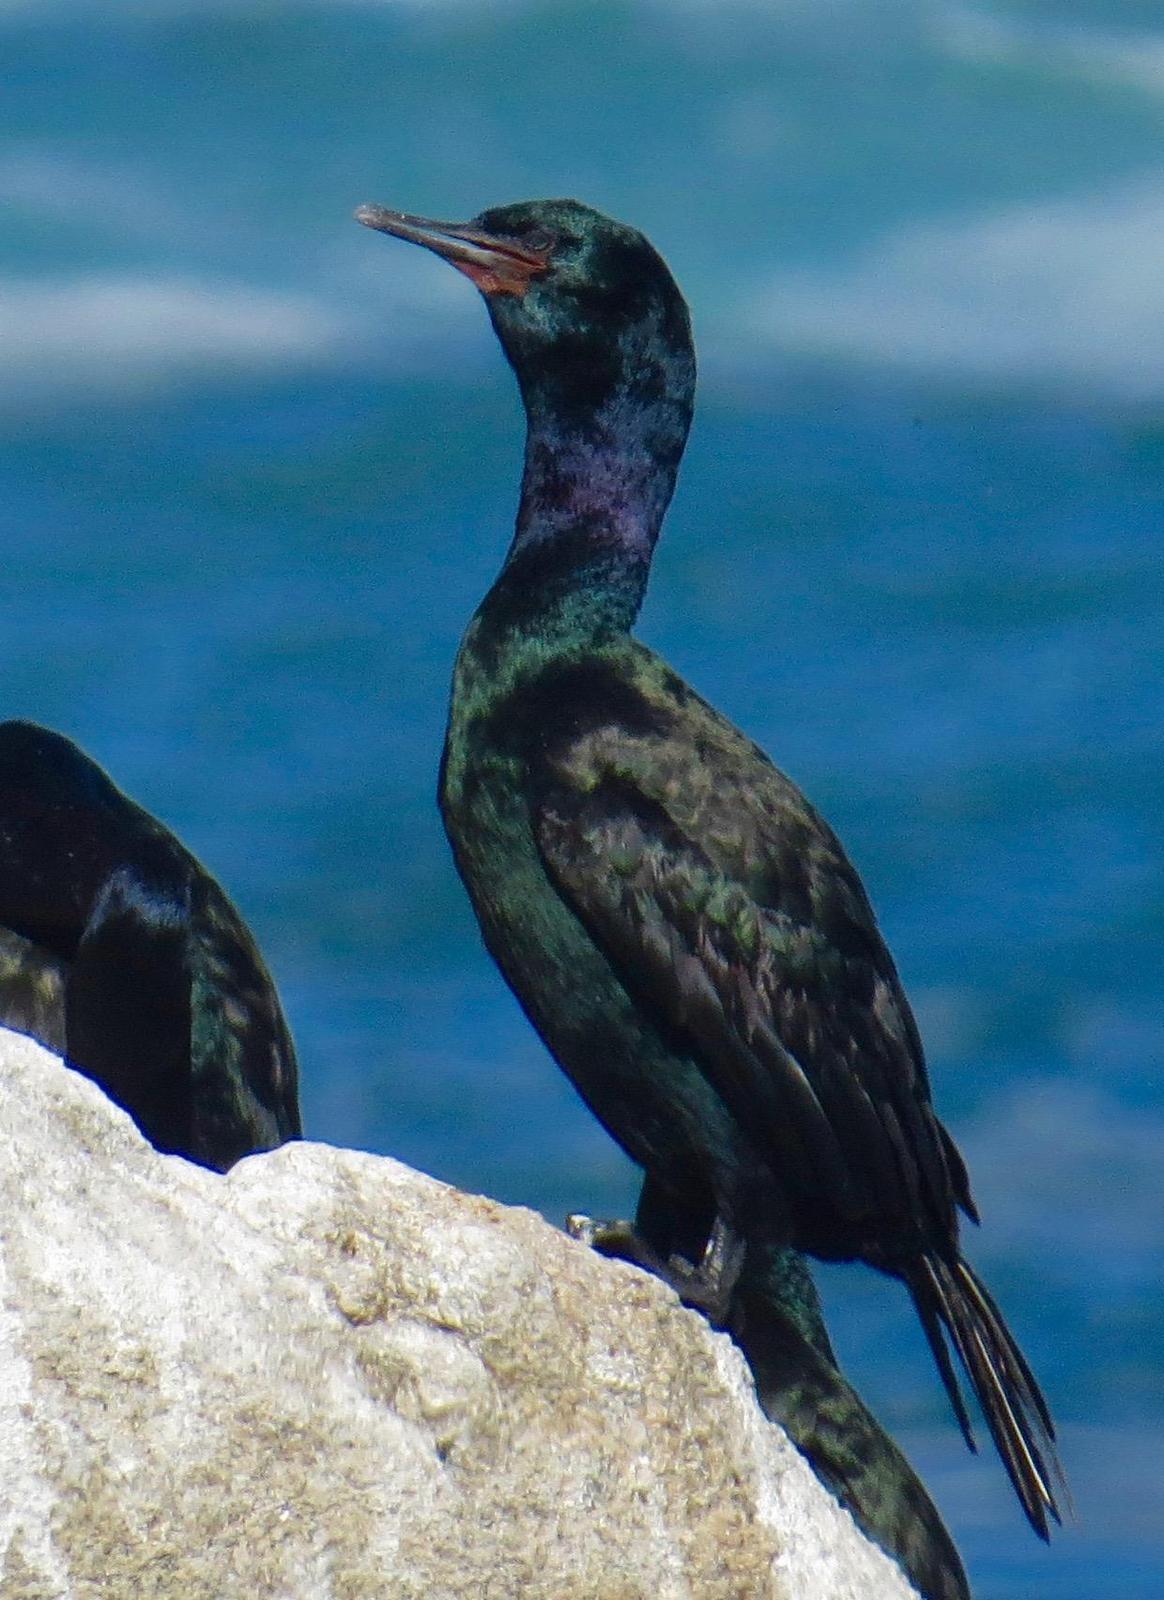 Pelagic Cormorant Photo by Don Glasco